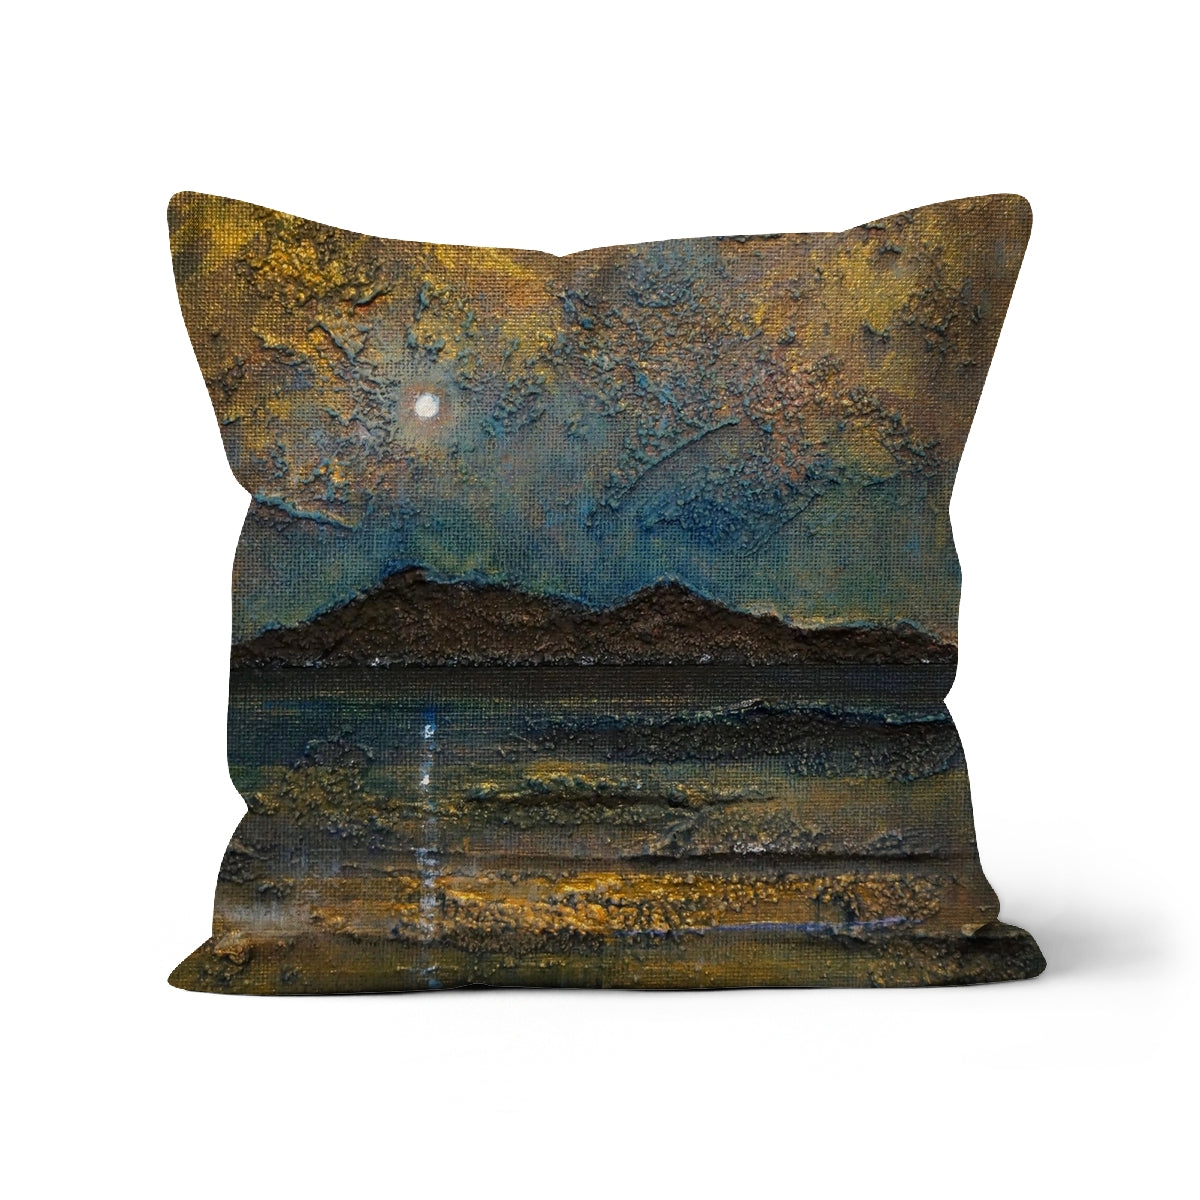 Arran Moonlight Art Gifts Cushion-Cushions-Arran Art Gallery-Linen-16"x16"-Paintings, Prints, Homeware, Art Gifts From Scotland By Scottish Artist Kevin Hunter